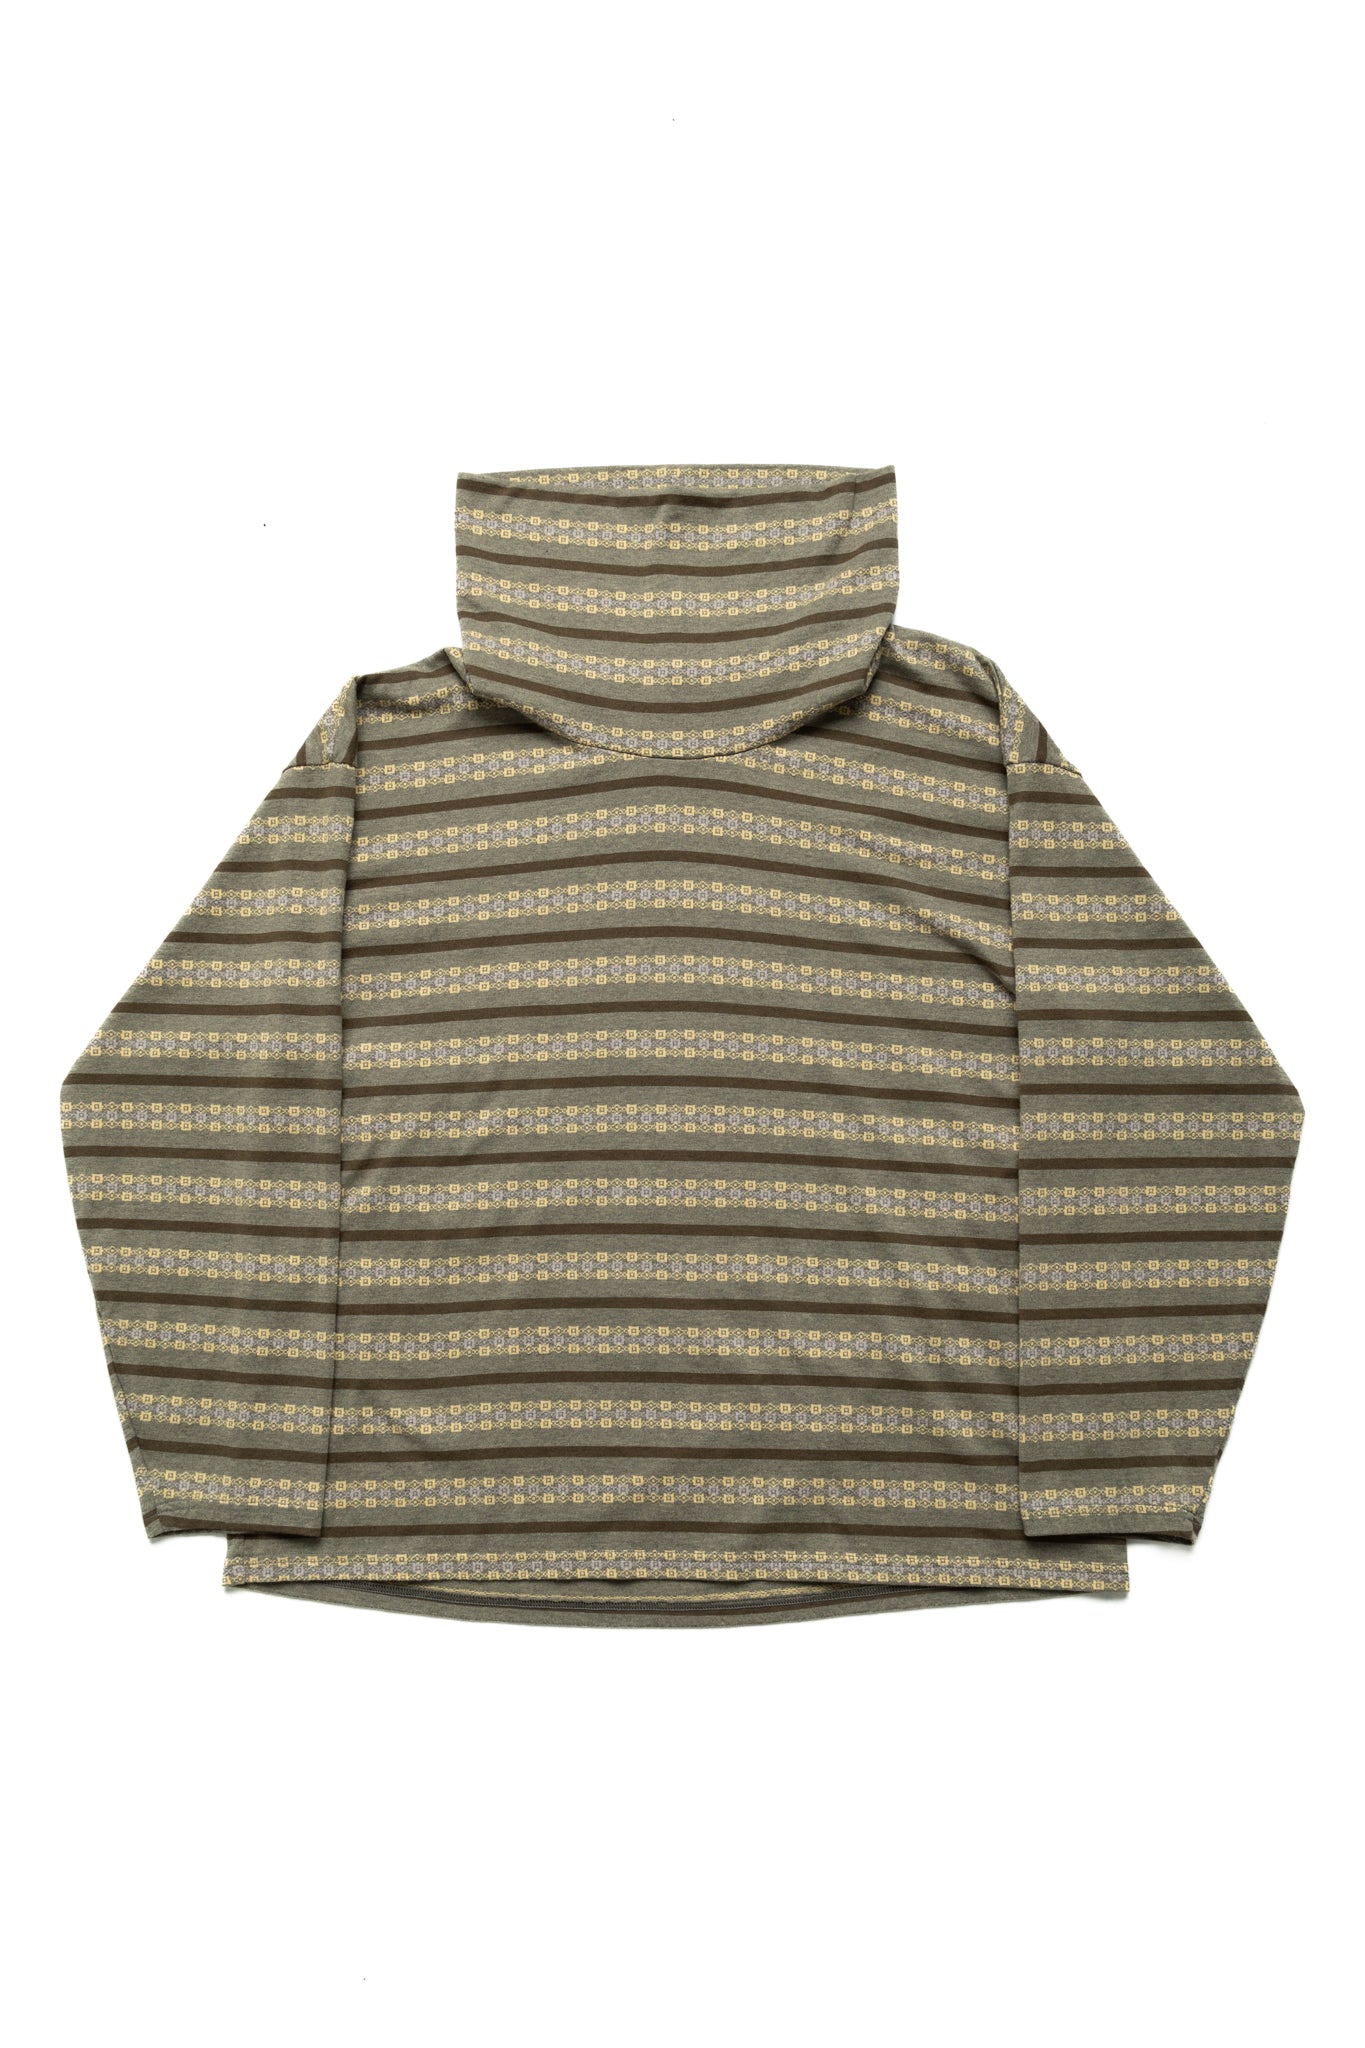 SUNRISE Jacquard Stripe Jersey Baggy High Neck Long Sleeve T - Grey x Khaki